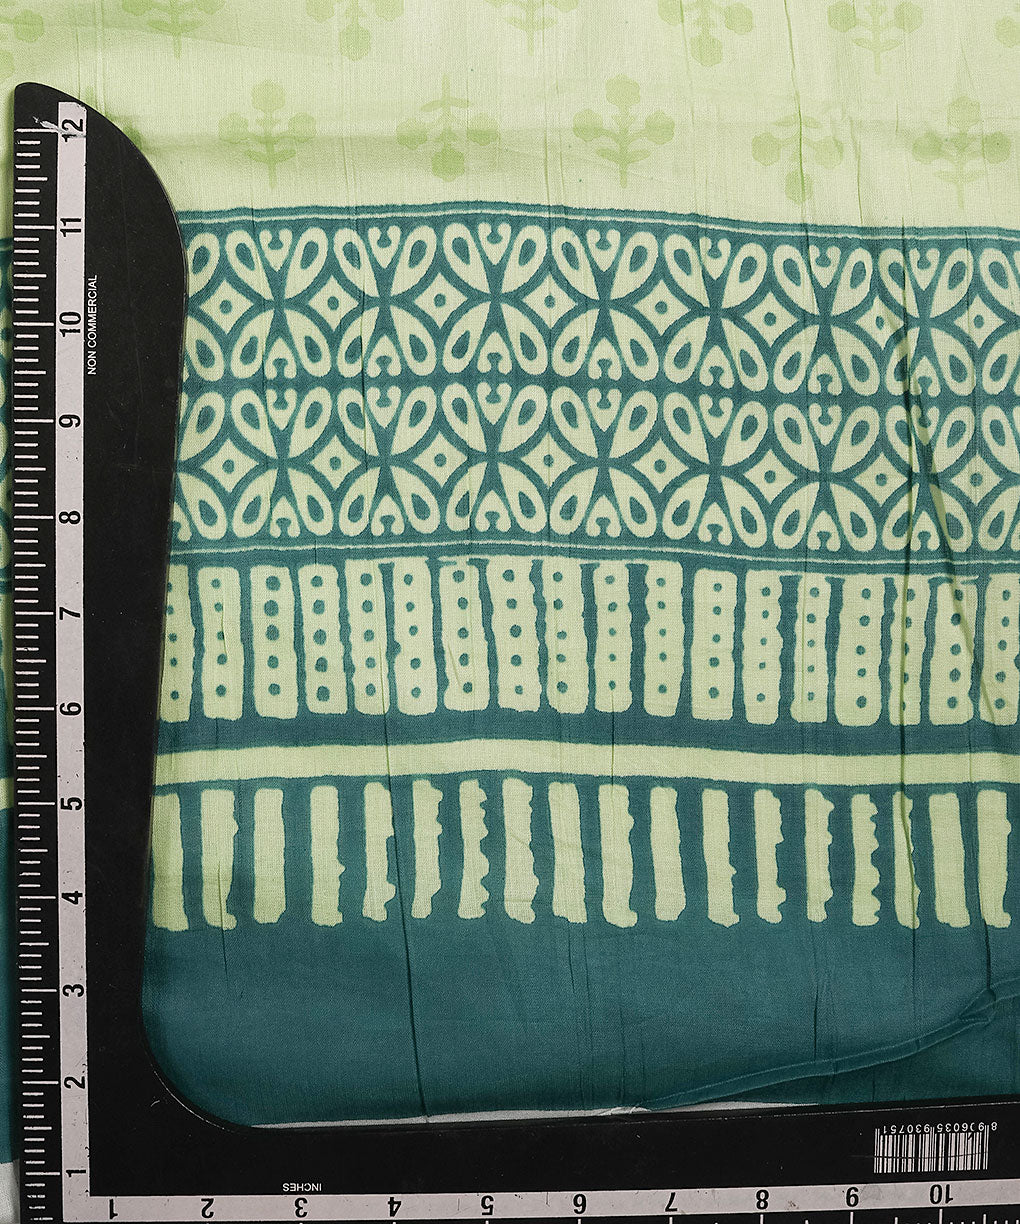 Screen Print Voile Cotton Fabric